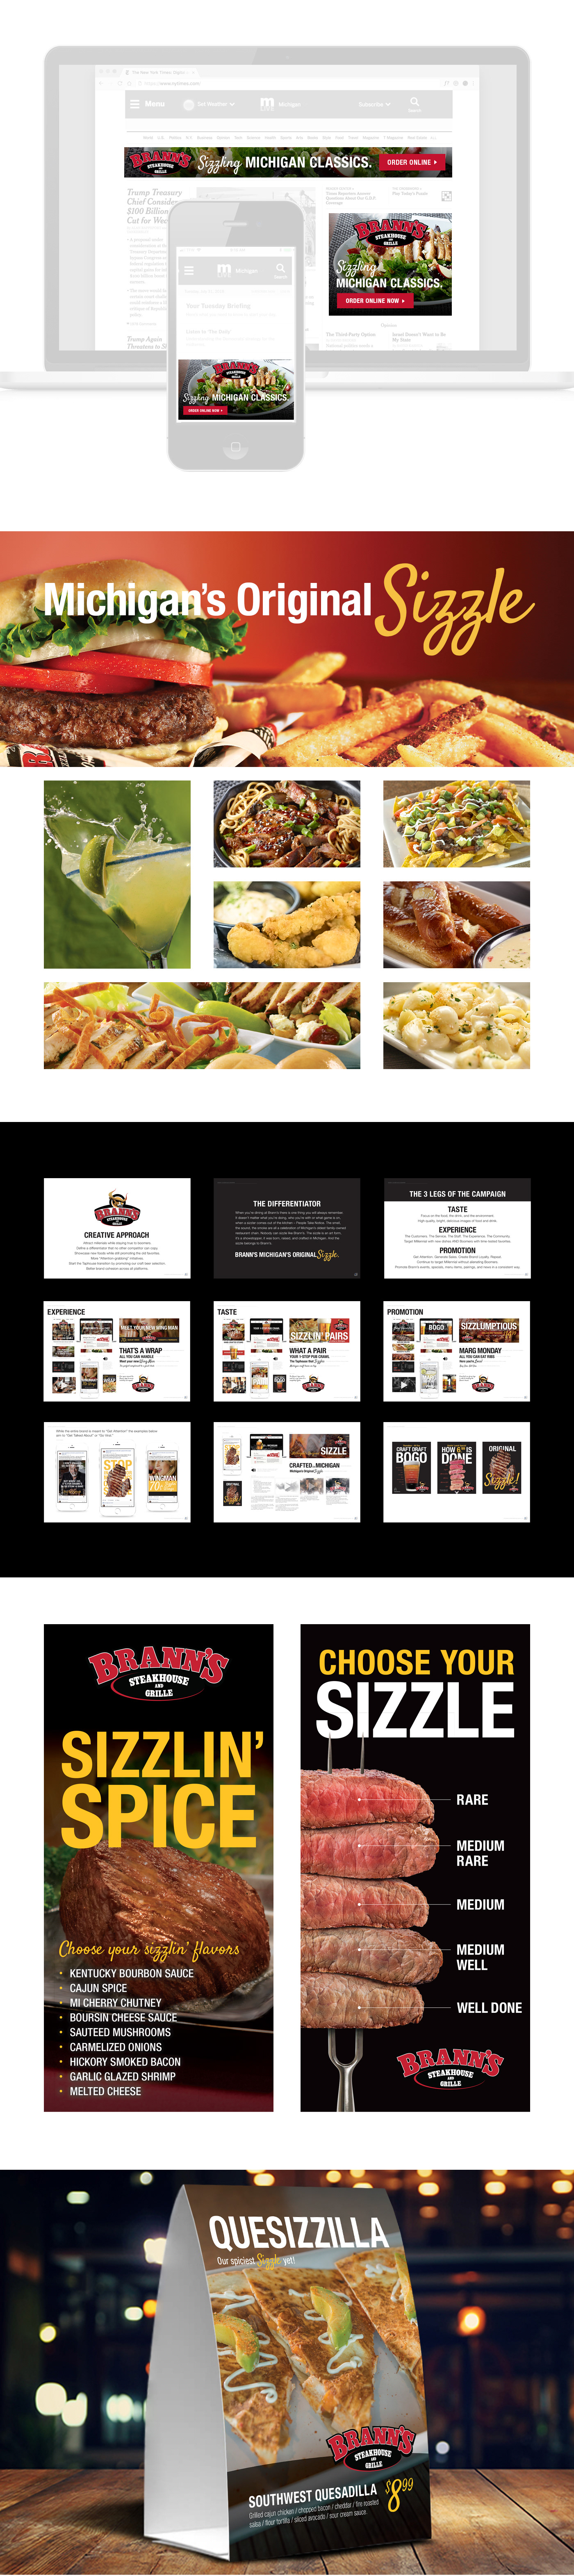 Brann's Food  restaurant chain marketing   branding  sizzle campaign Grand Rapids Michigan